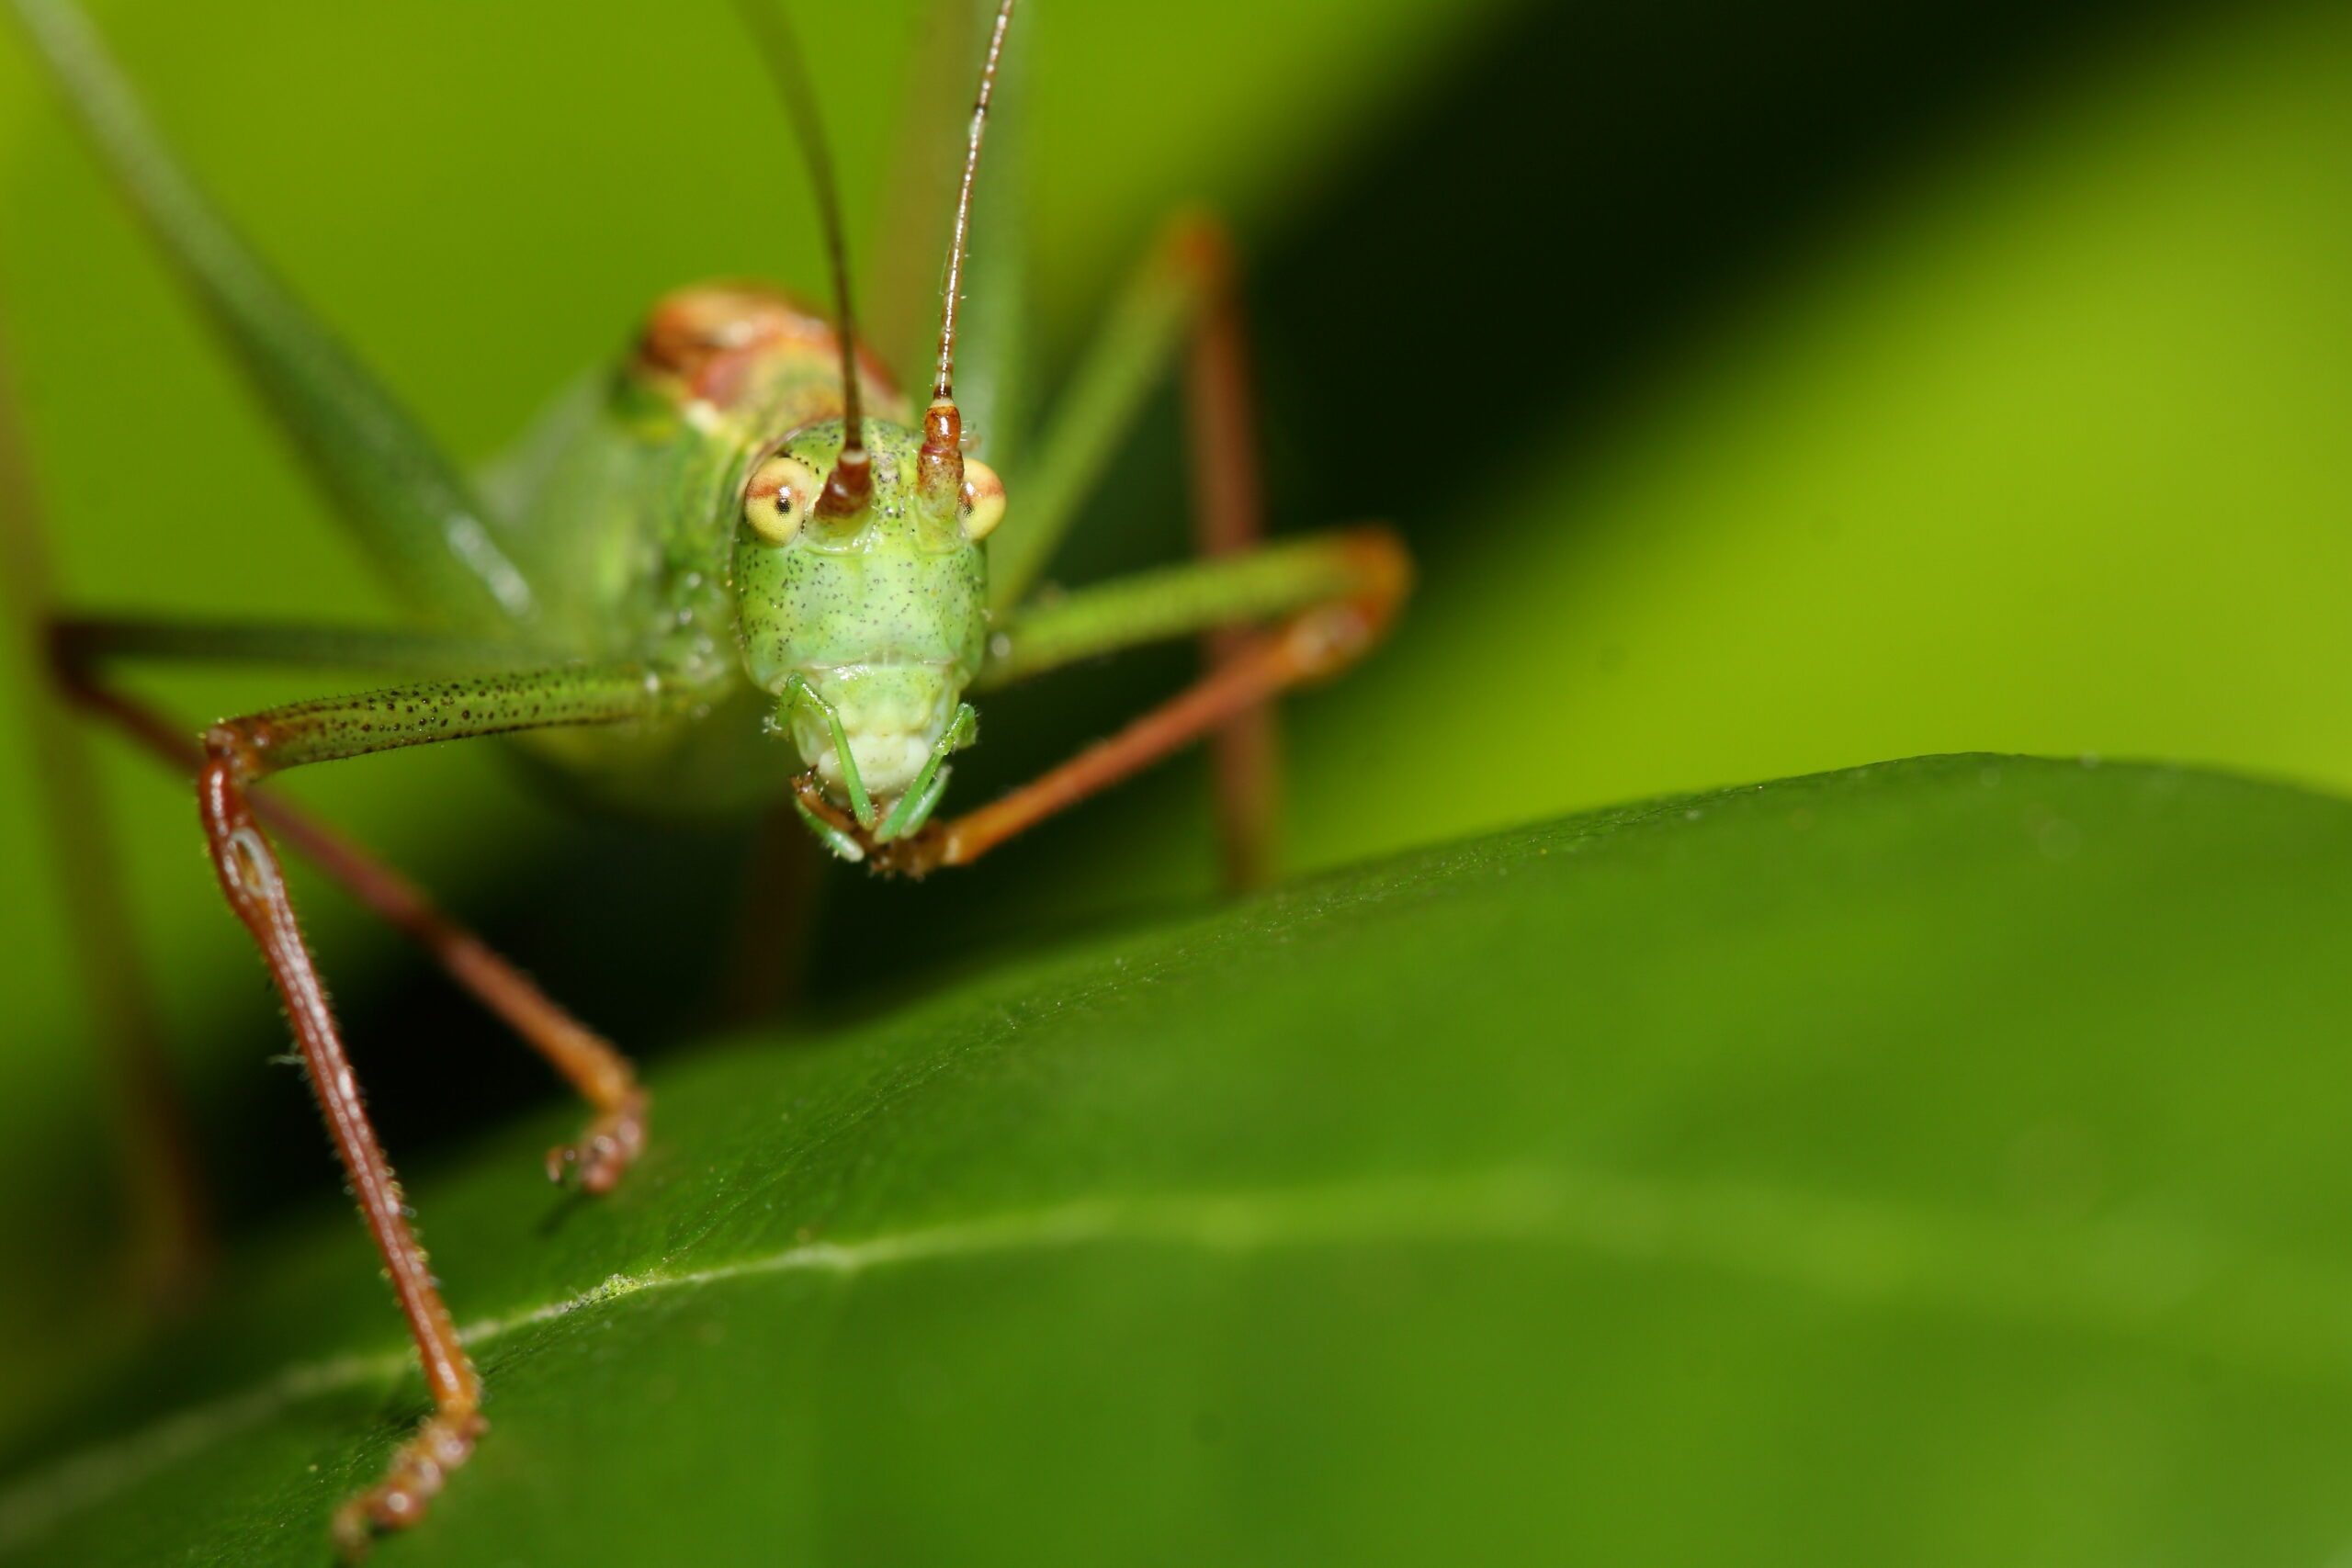 Cricket on a leaf in a garden.